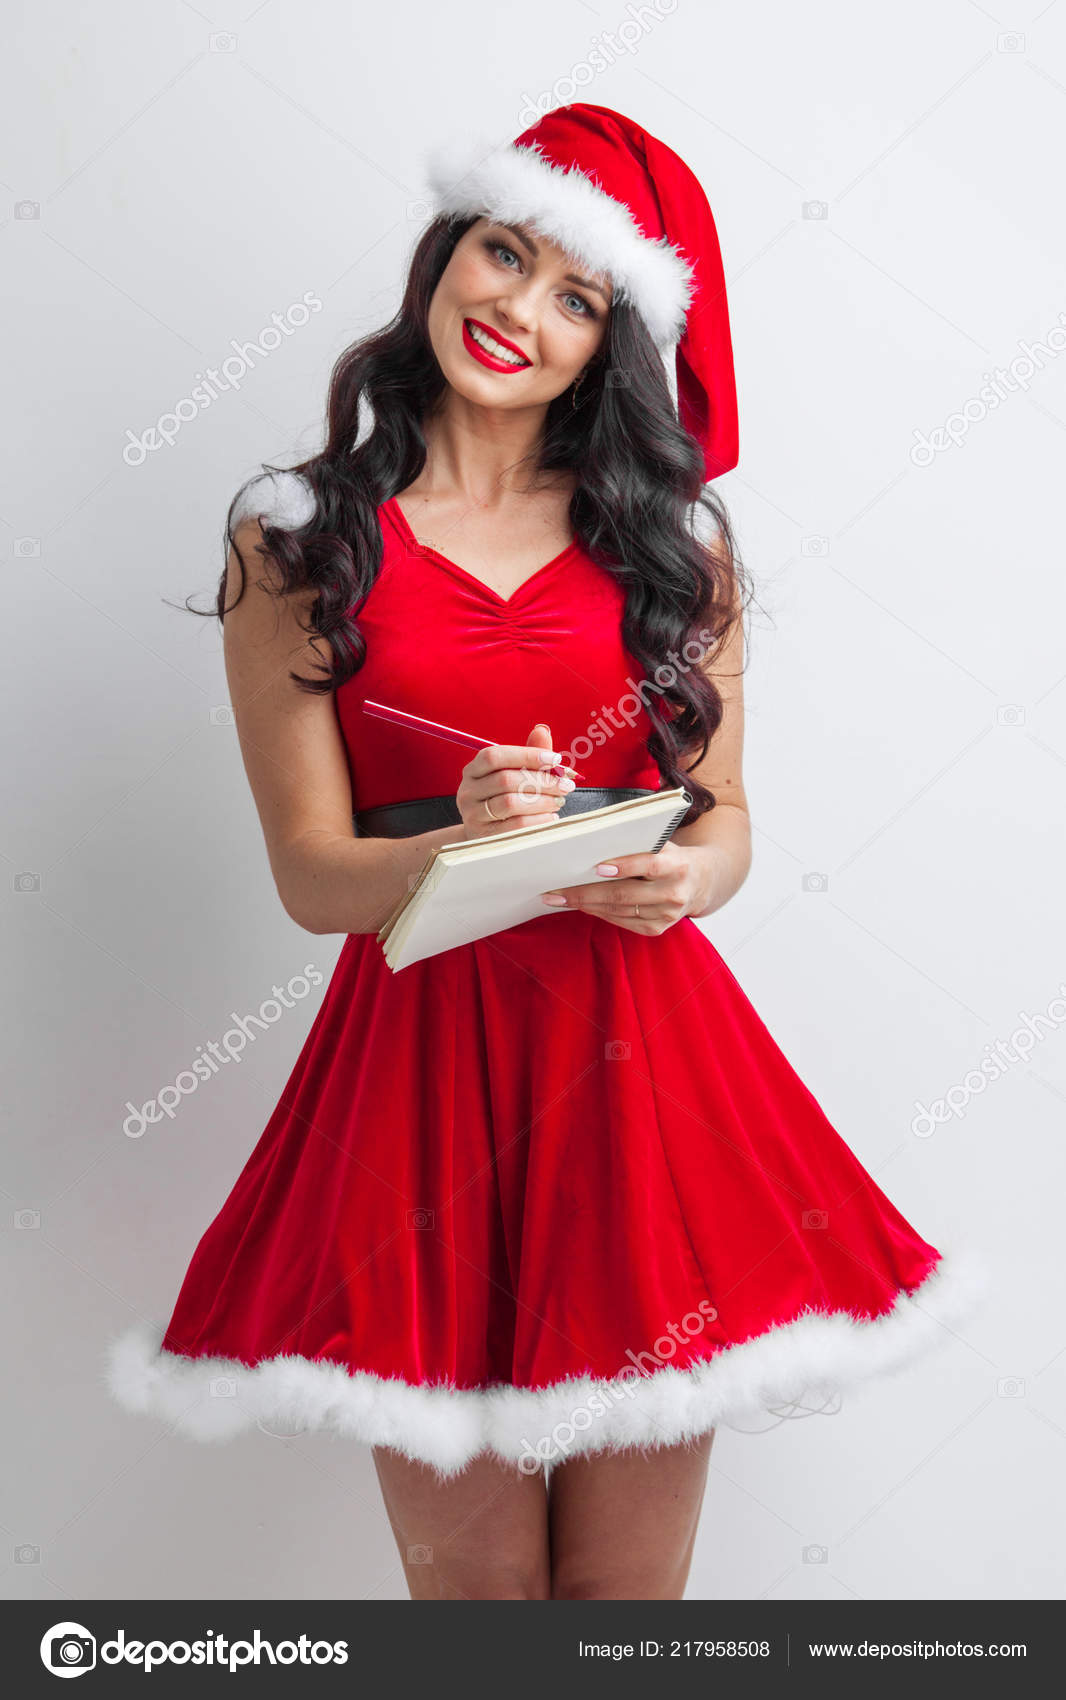 https://st4.depositphotos.com/1043073/21795/i/1600/depositphotos_217958508-stock-photo-pretty-smiling-pin-santa-girl.jpg